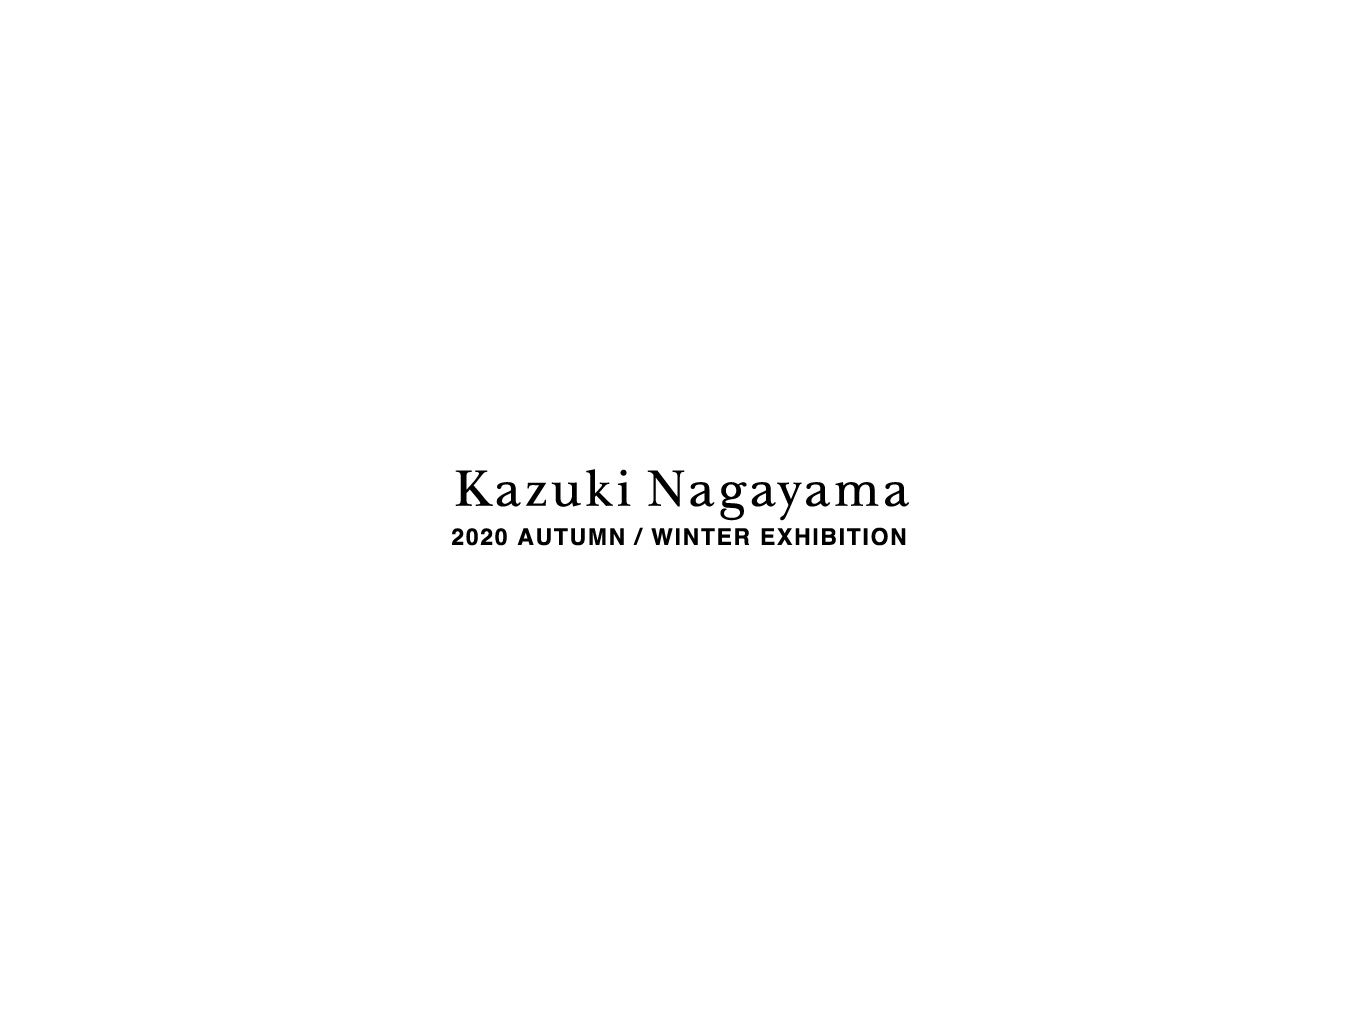 Kazuki Nagayama 2020 AUTUMN/WINTER EXHIBITION